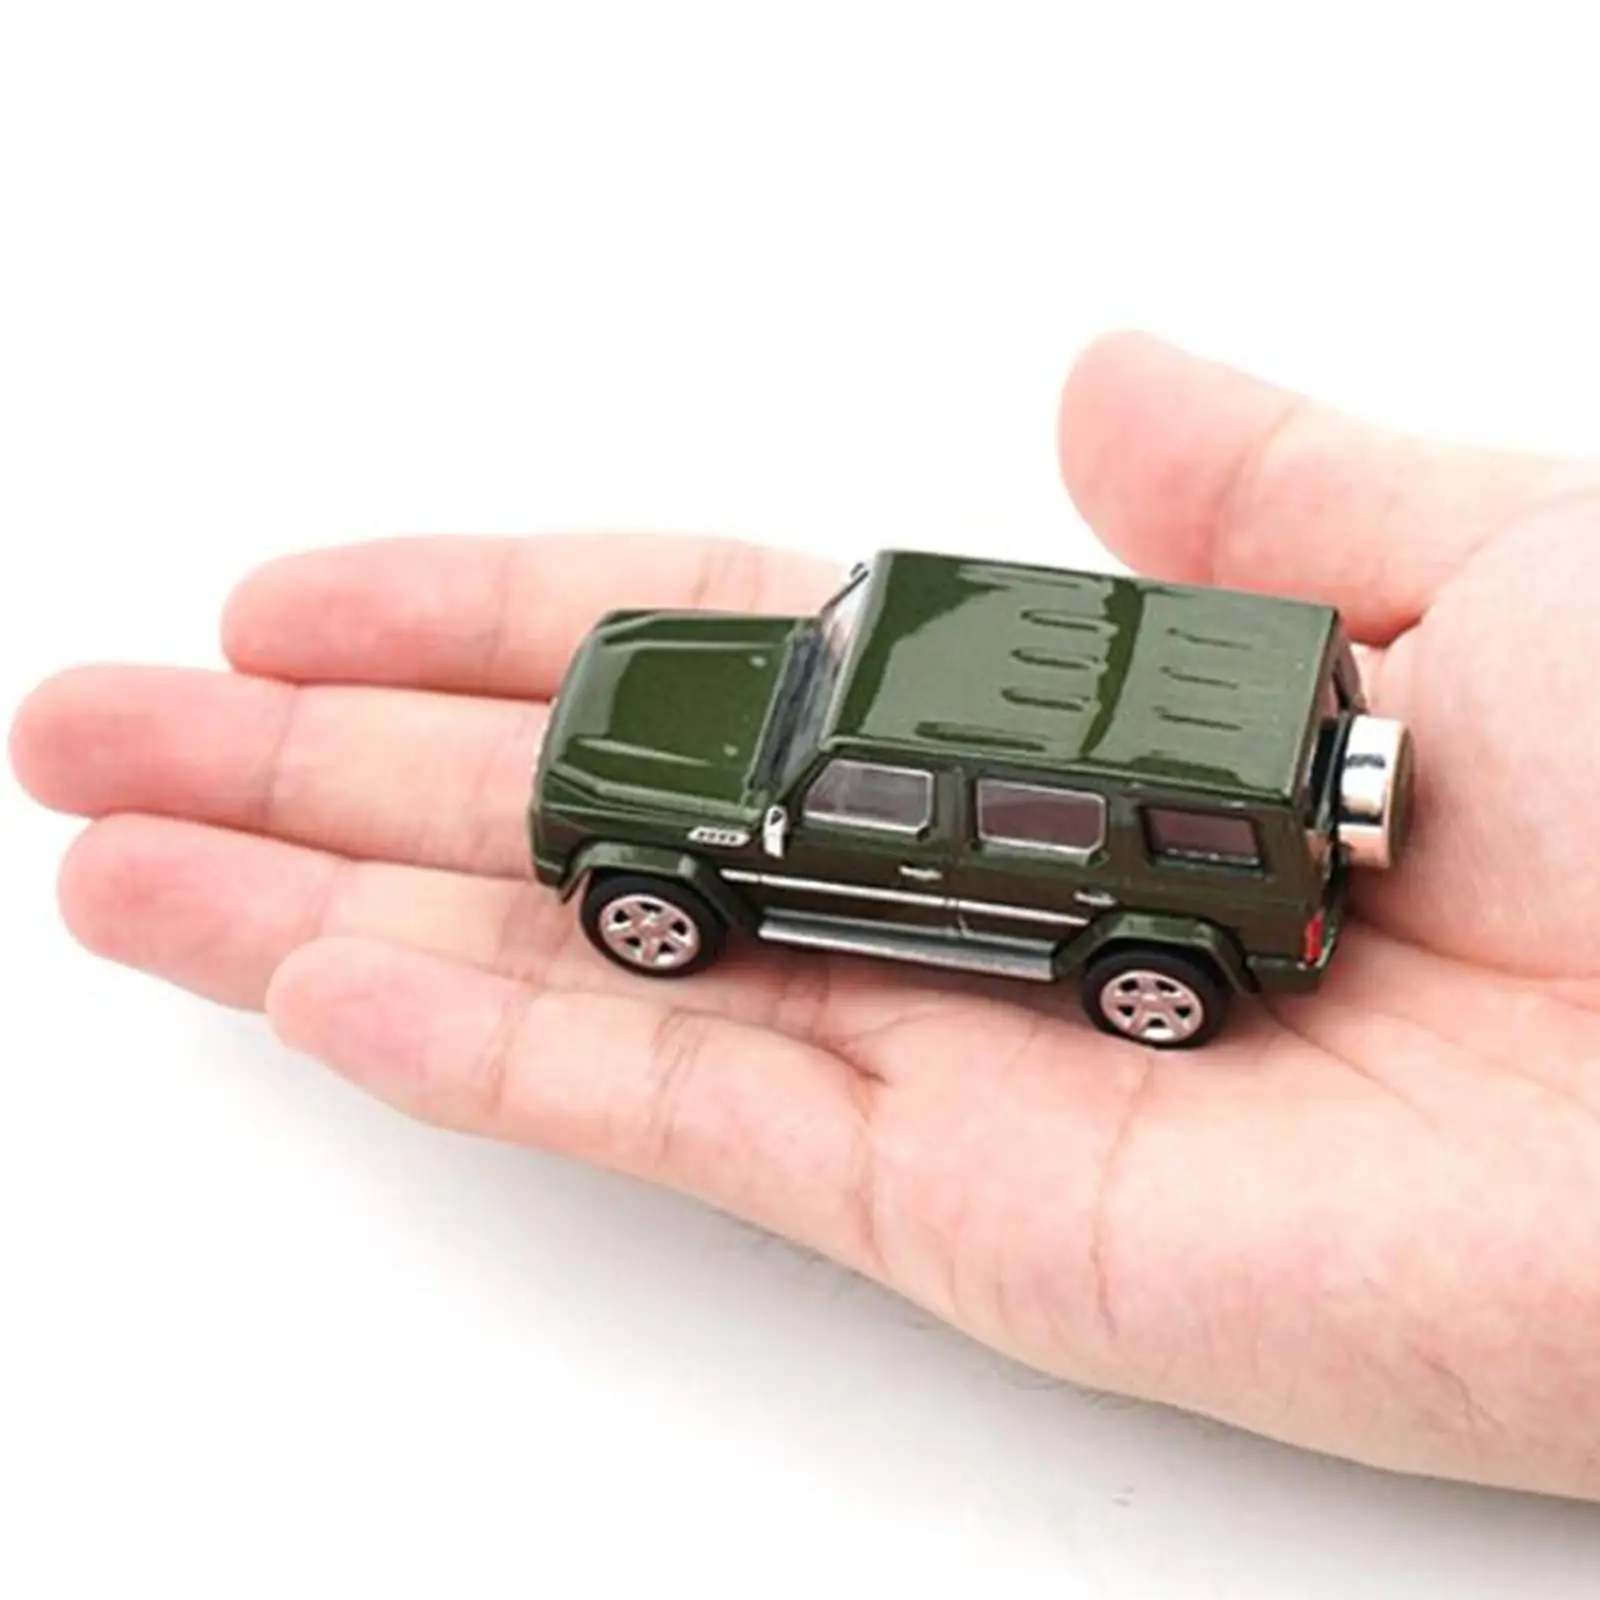 1/64 Car Model Figure Diecast Toys Sand Table Ornament for Dollhouse Photography Props Diorama Miniature Scene Decor